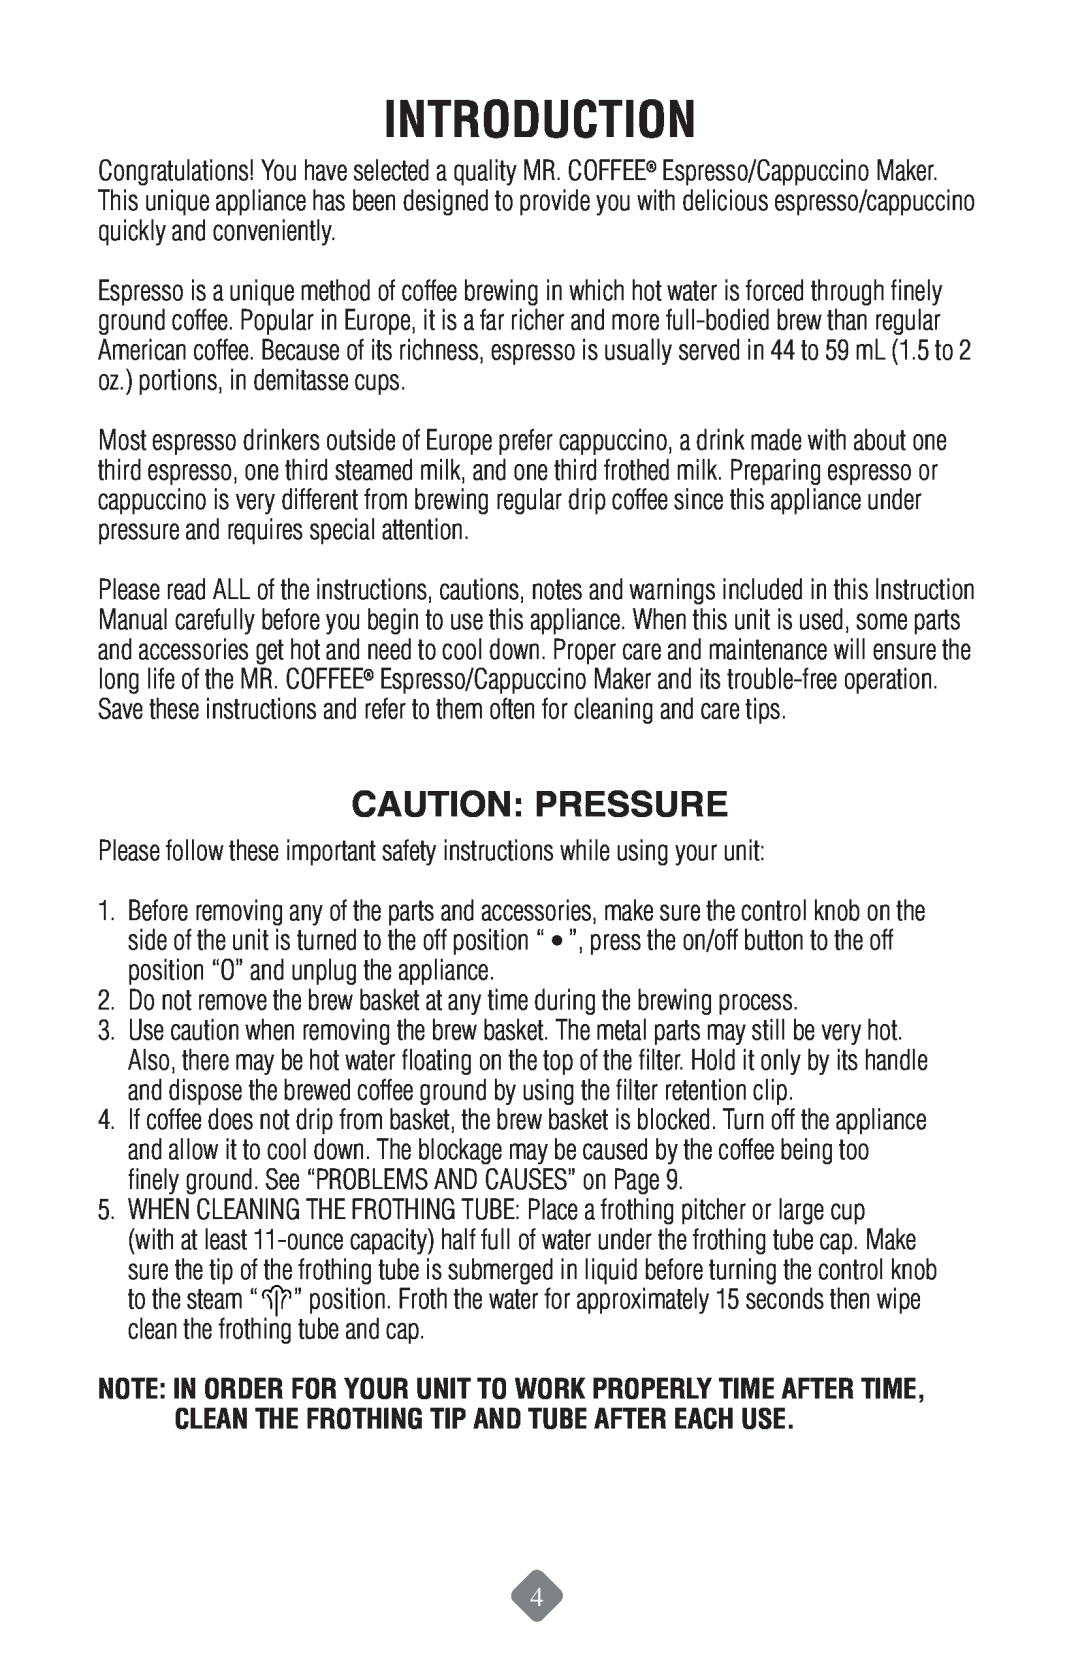 Mr. Coffee ECMP50 instruction manual Introduction, Caution Pressure 